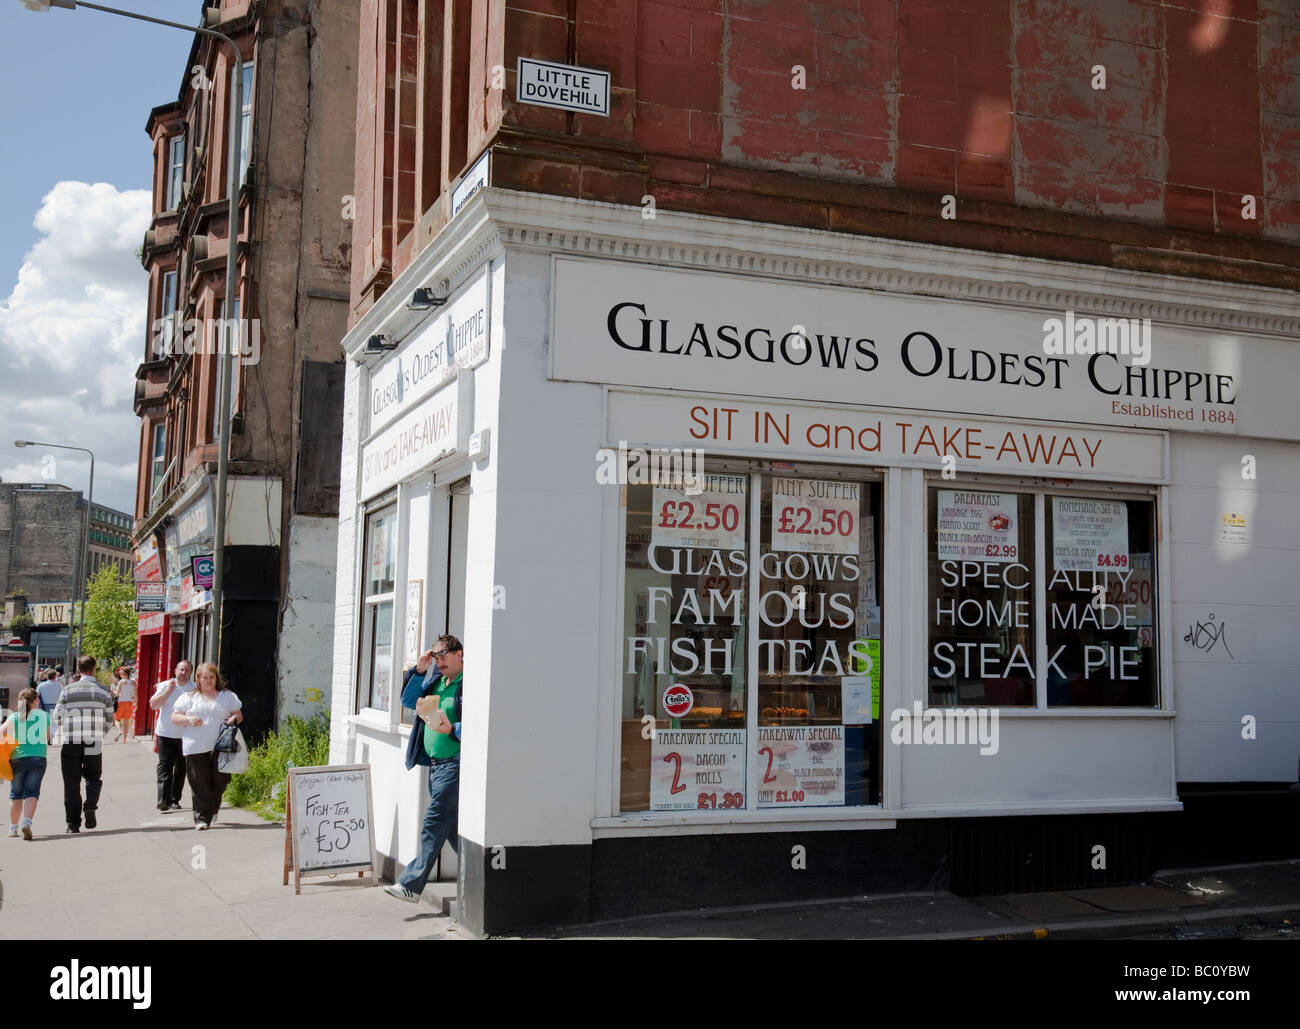 Glasgow's Oldest Chippie Stock Photo